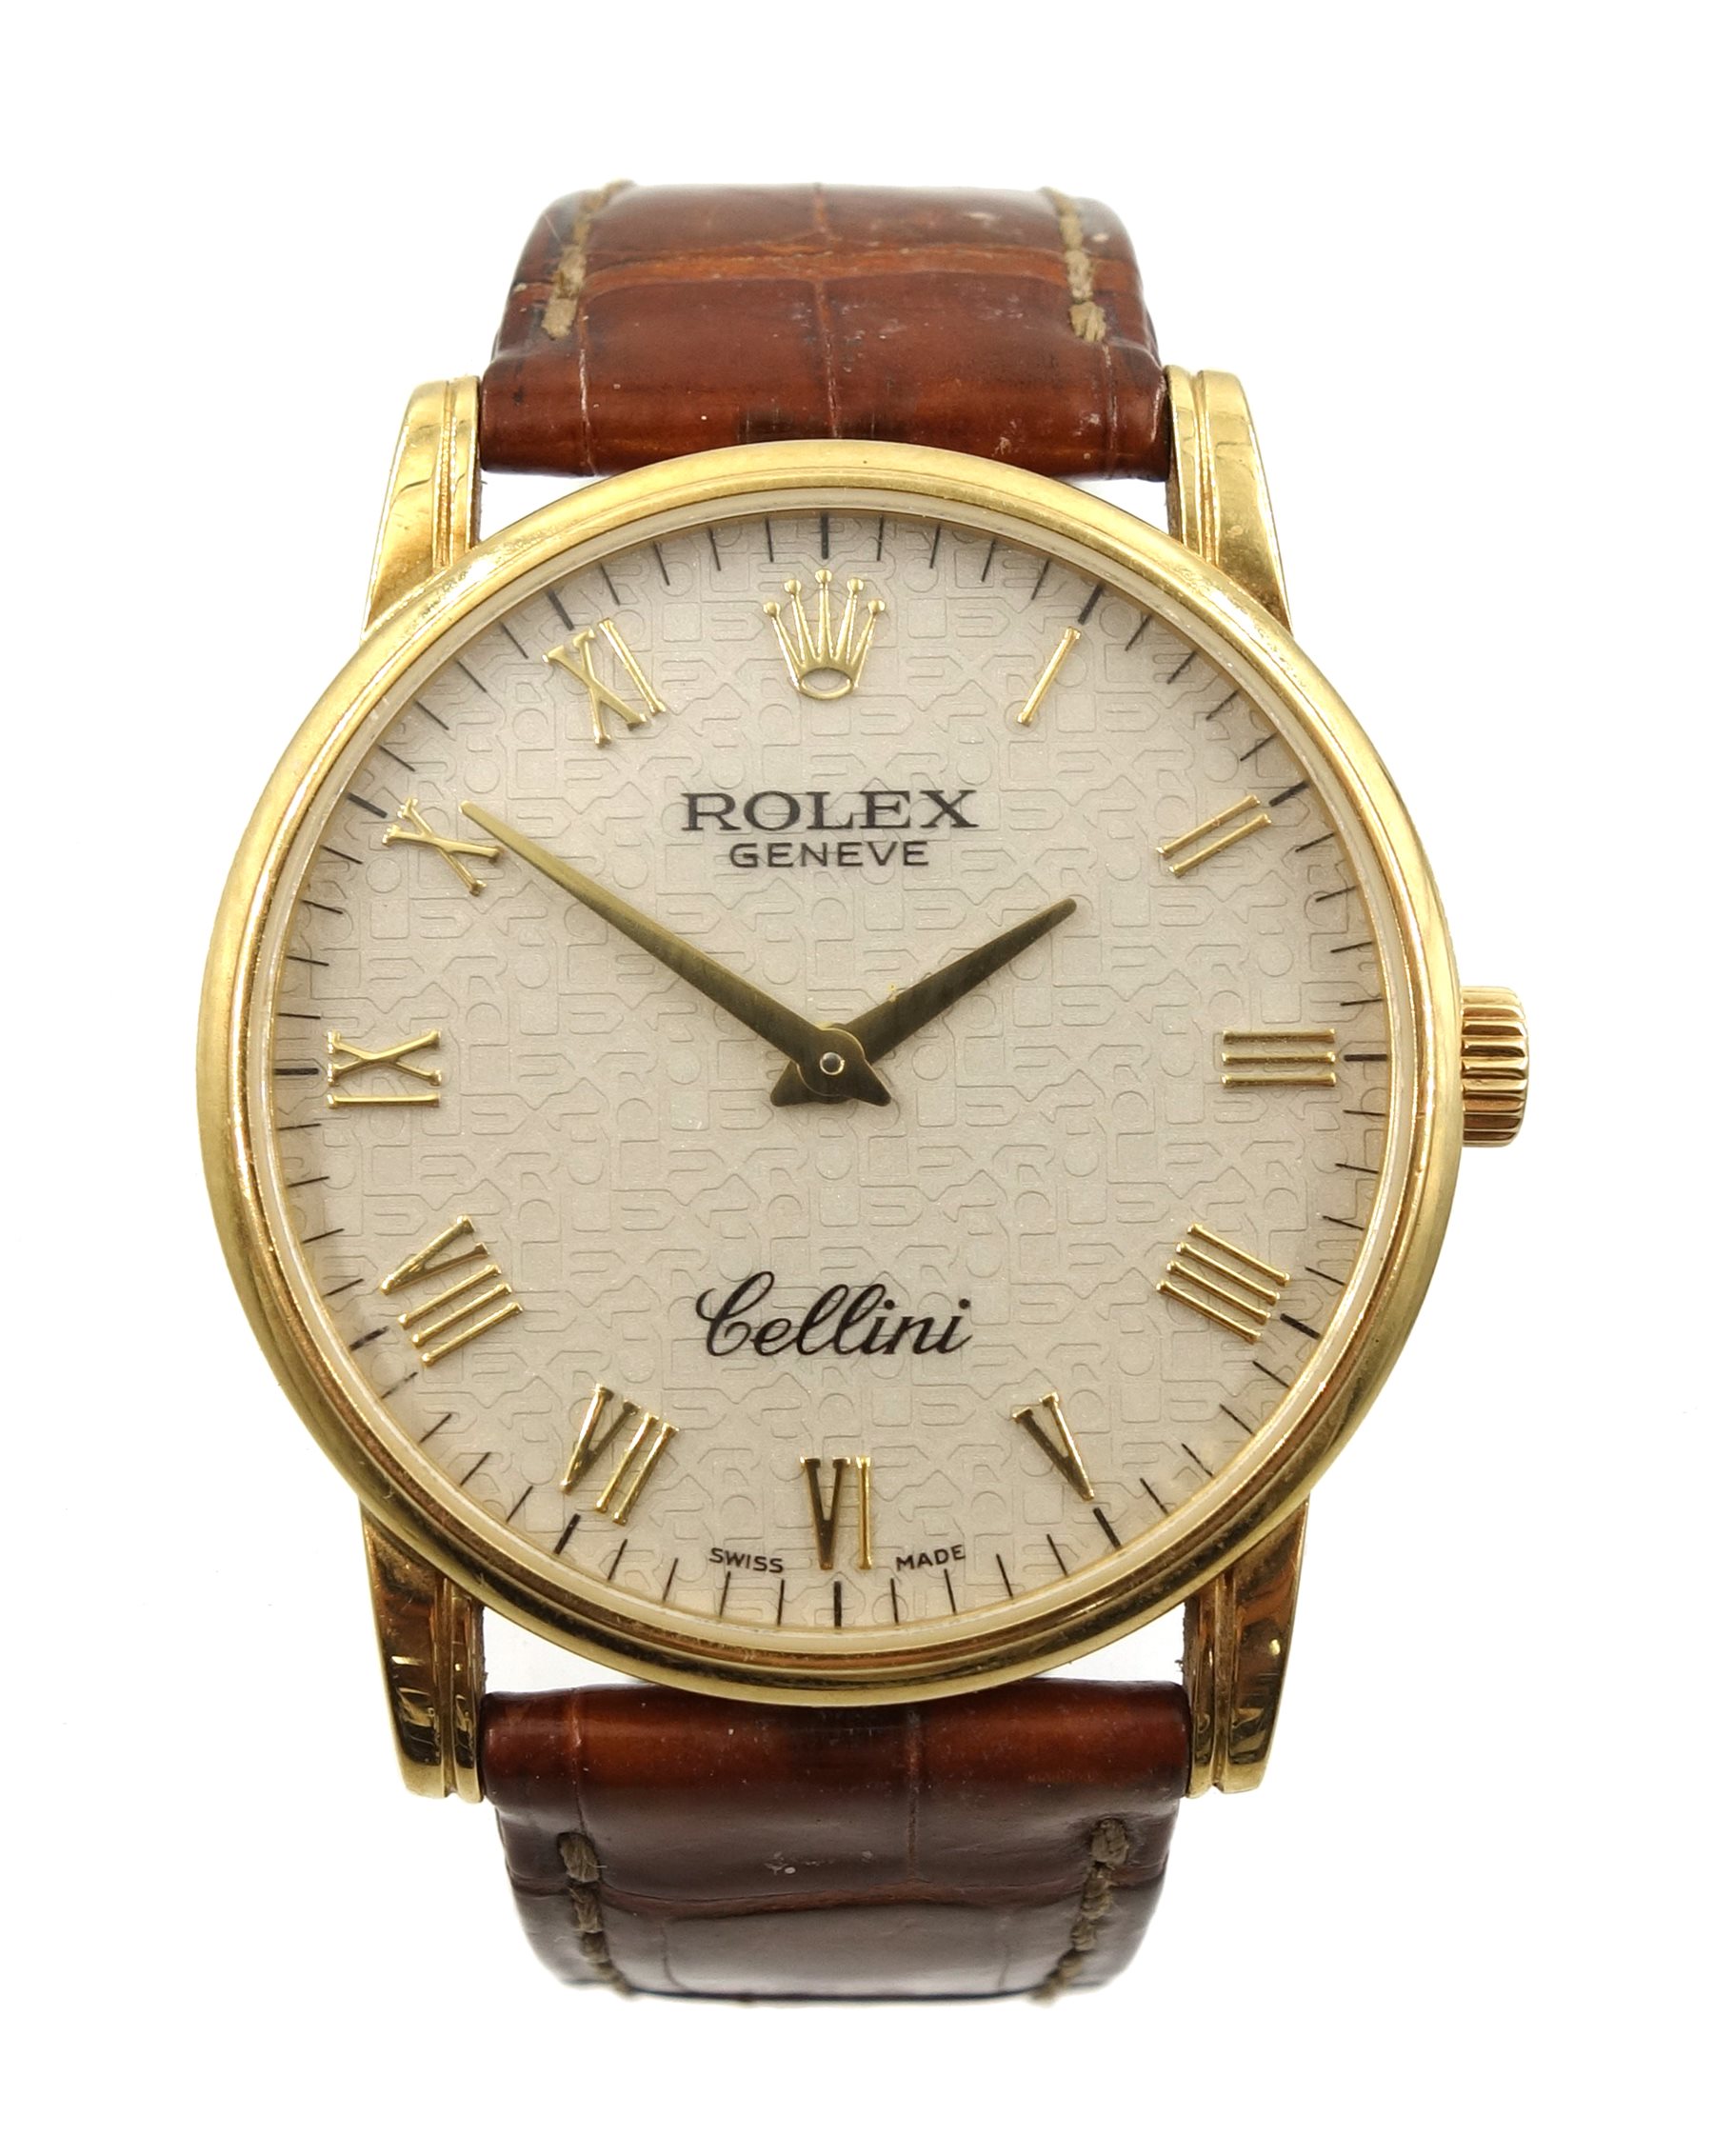 Rolex Geneve Cellini gentleman's 18ct gold, mechanical wristwatch